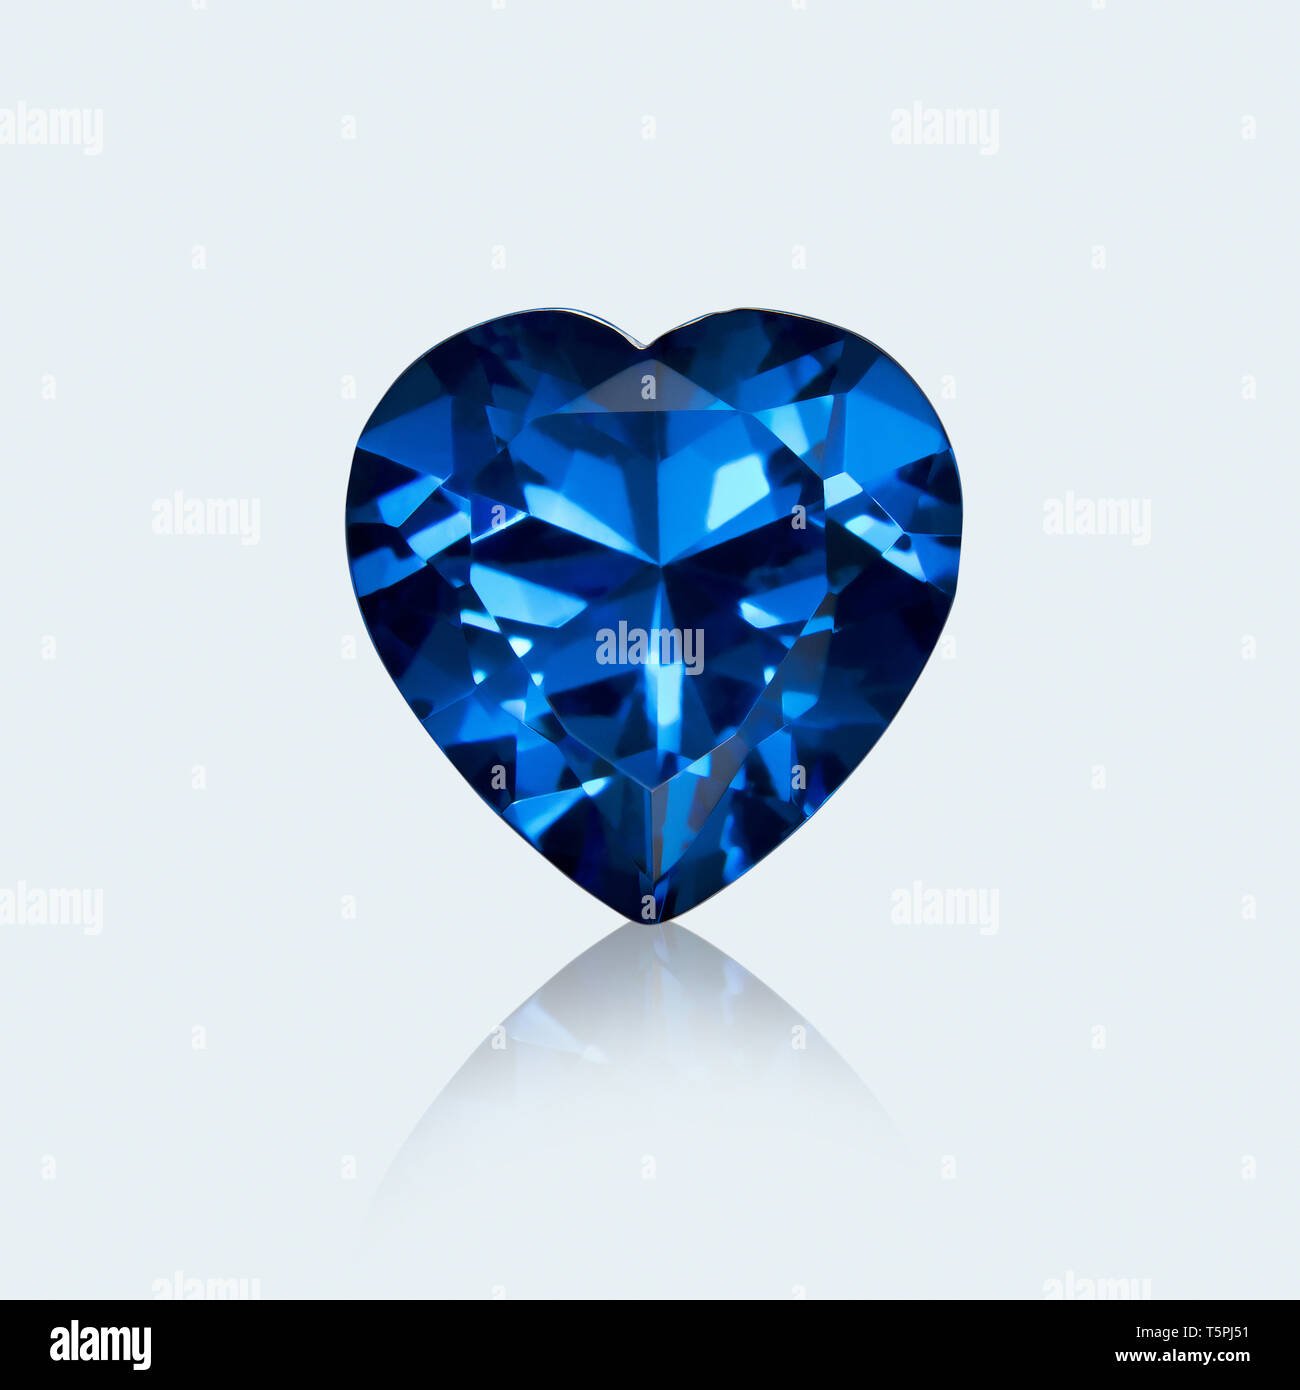 Blue Sapphire, Iolite, Blue Sapphire Gemstone, Iolite Gemstone, Heart cut Gemstone, Heart cut Blue Sapphire Gemstone, Heart Cut Iolite Gemstone Stock Photo